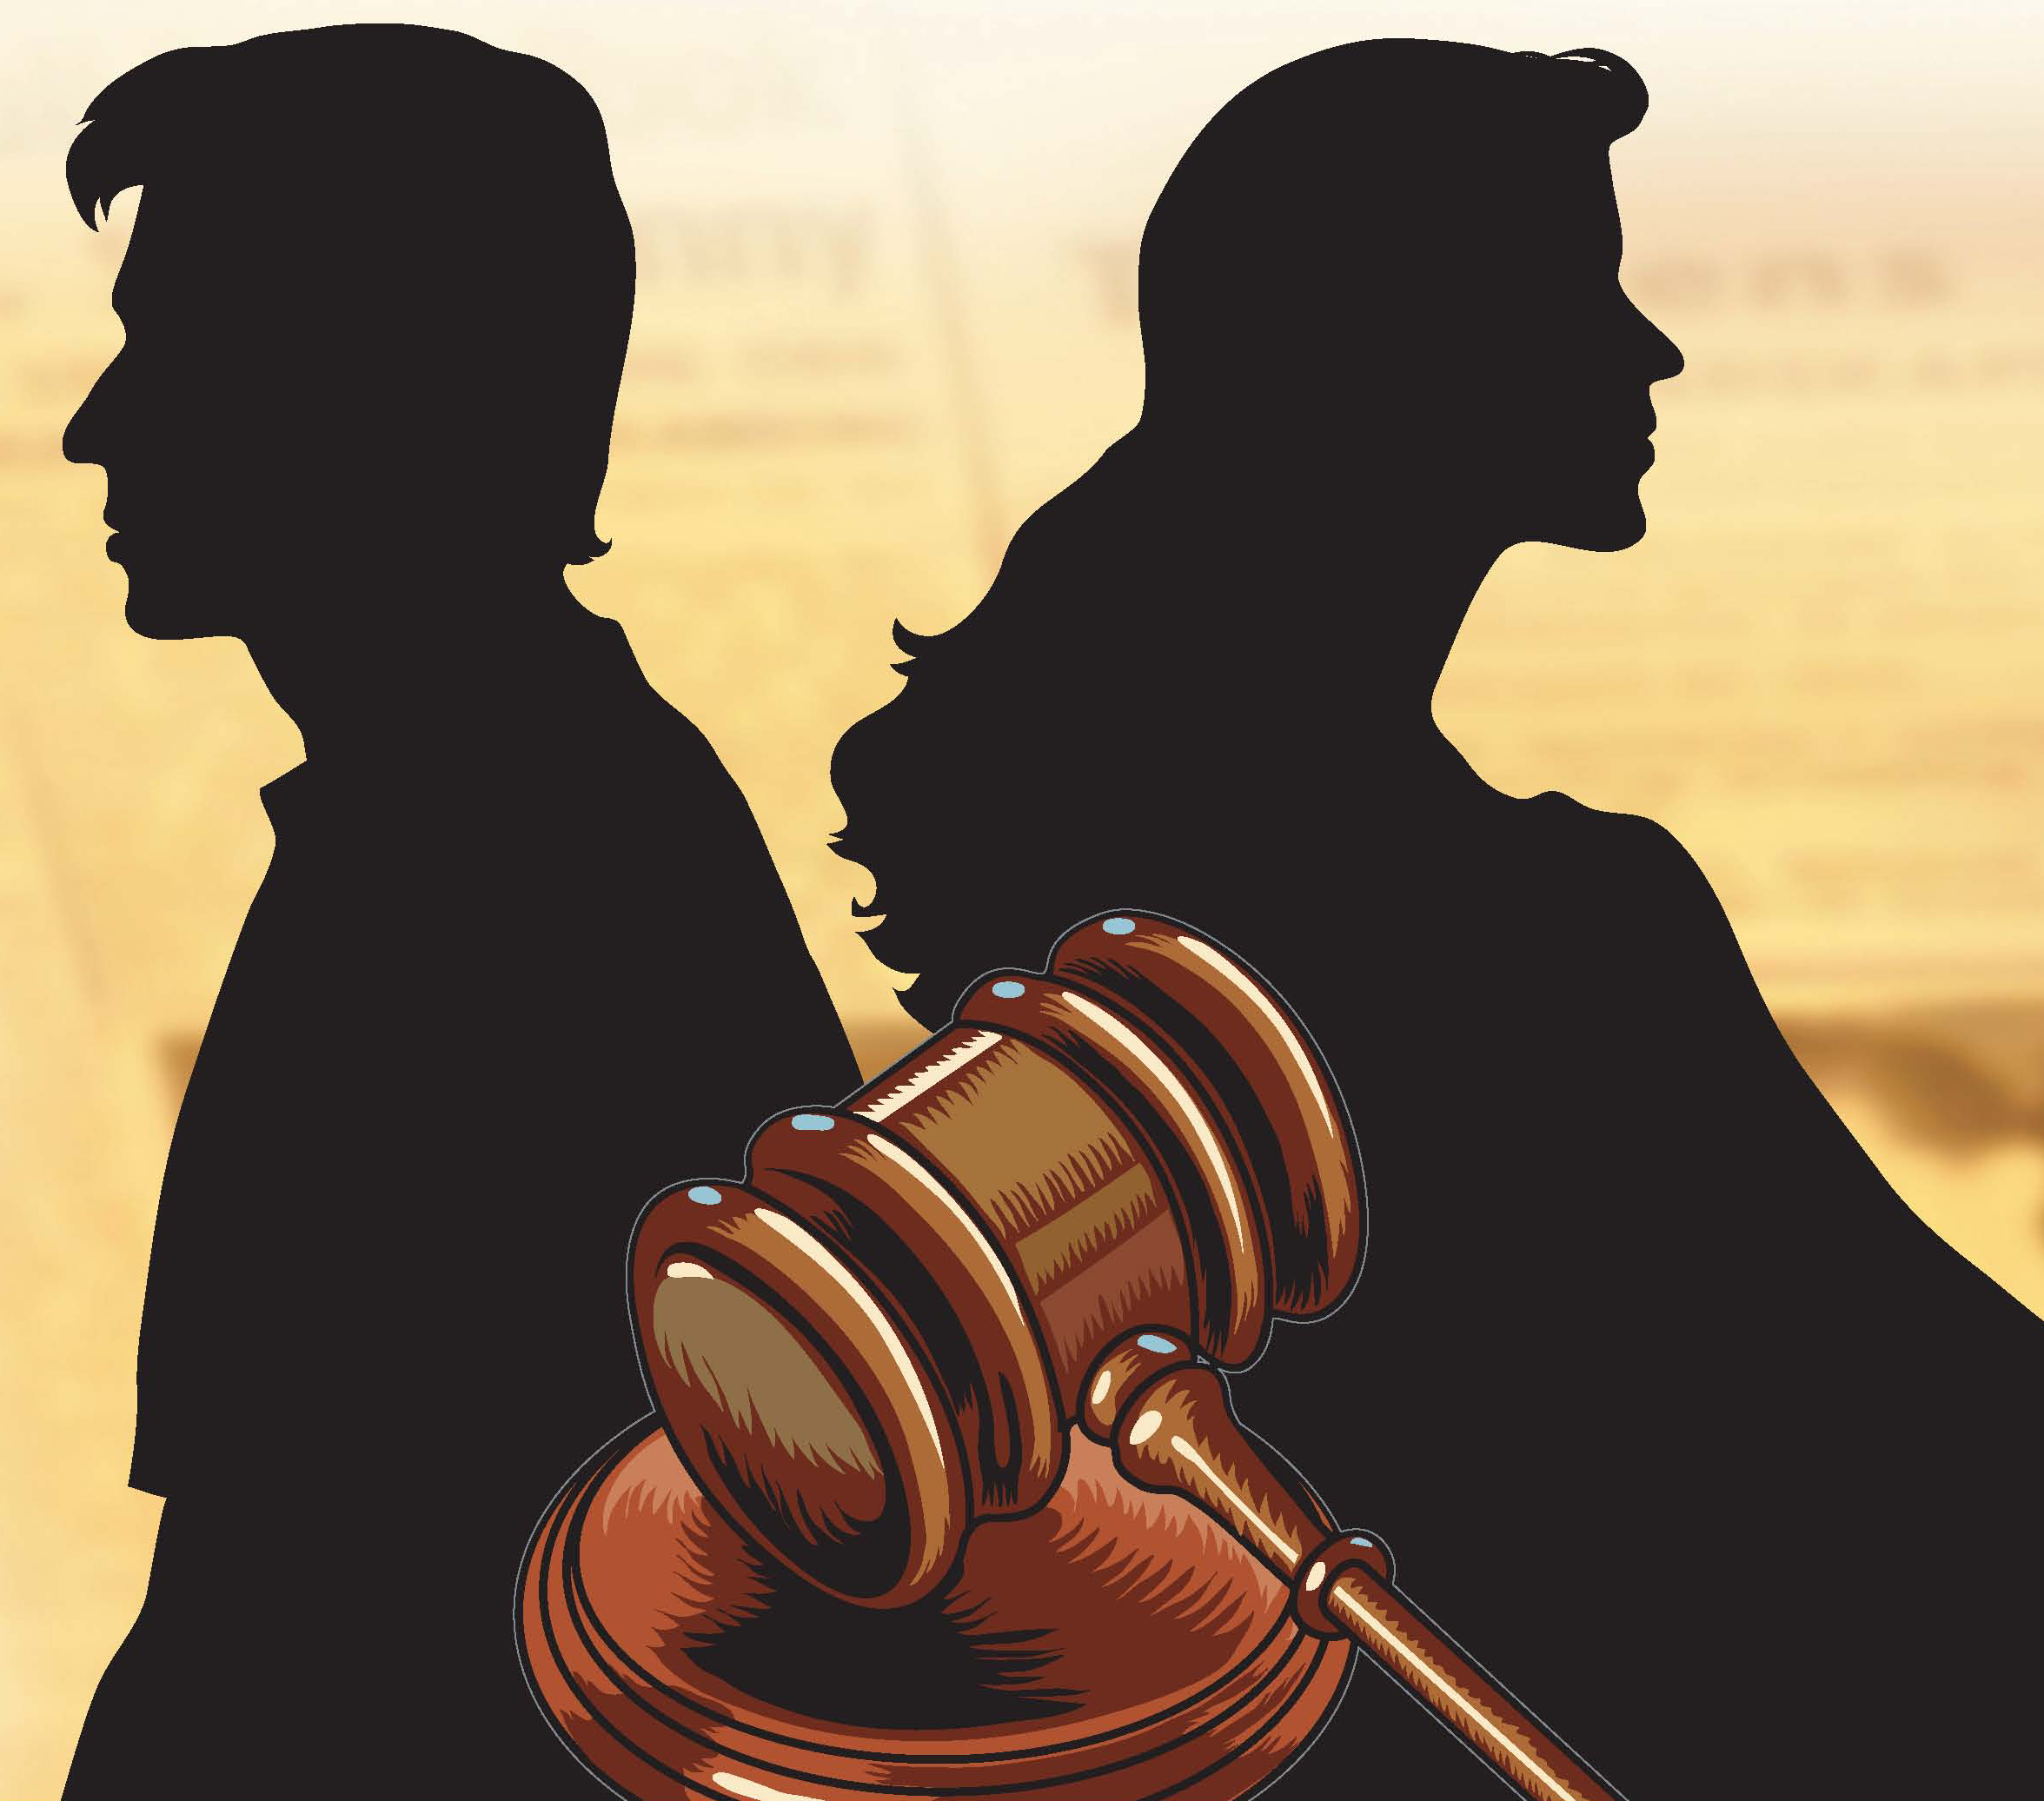 304 men register divorce cases in eleven months Jhapa